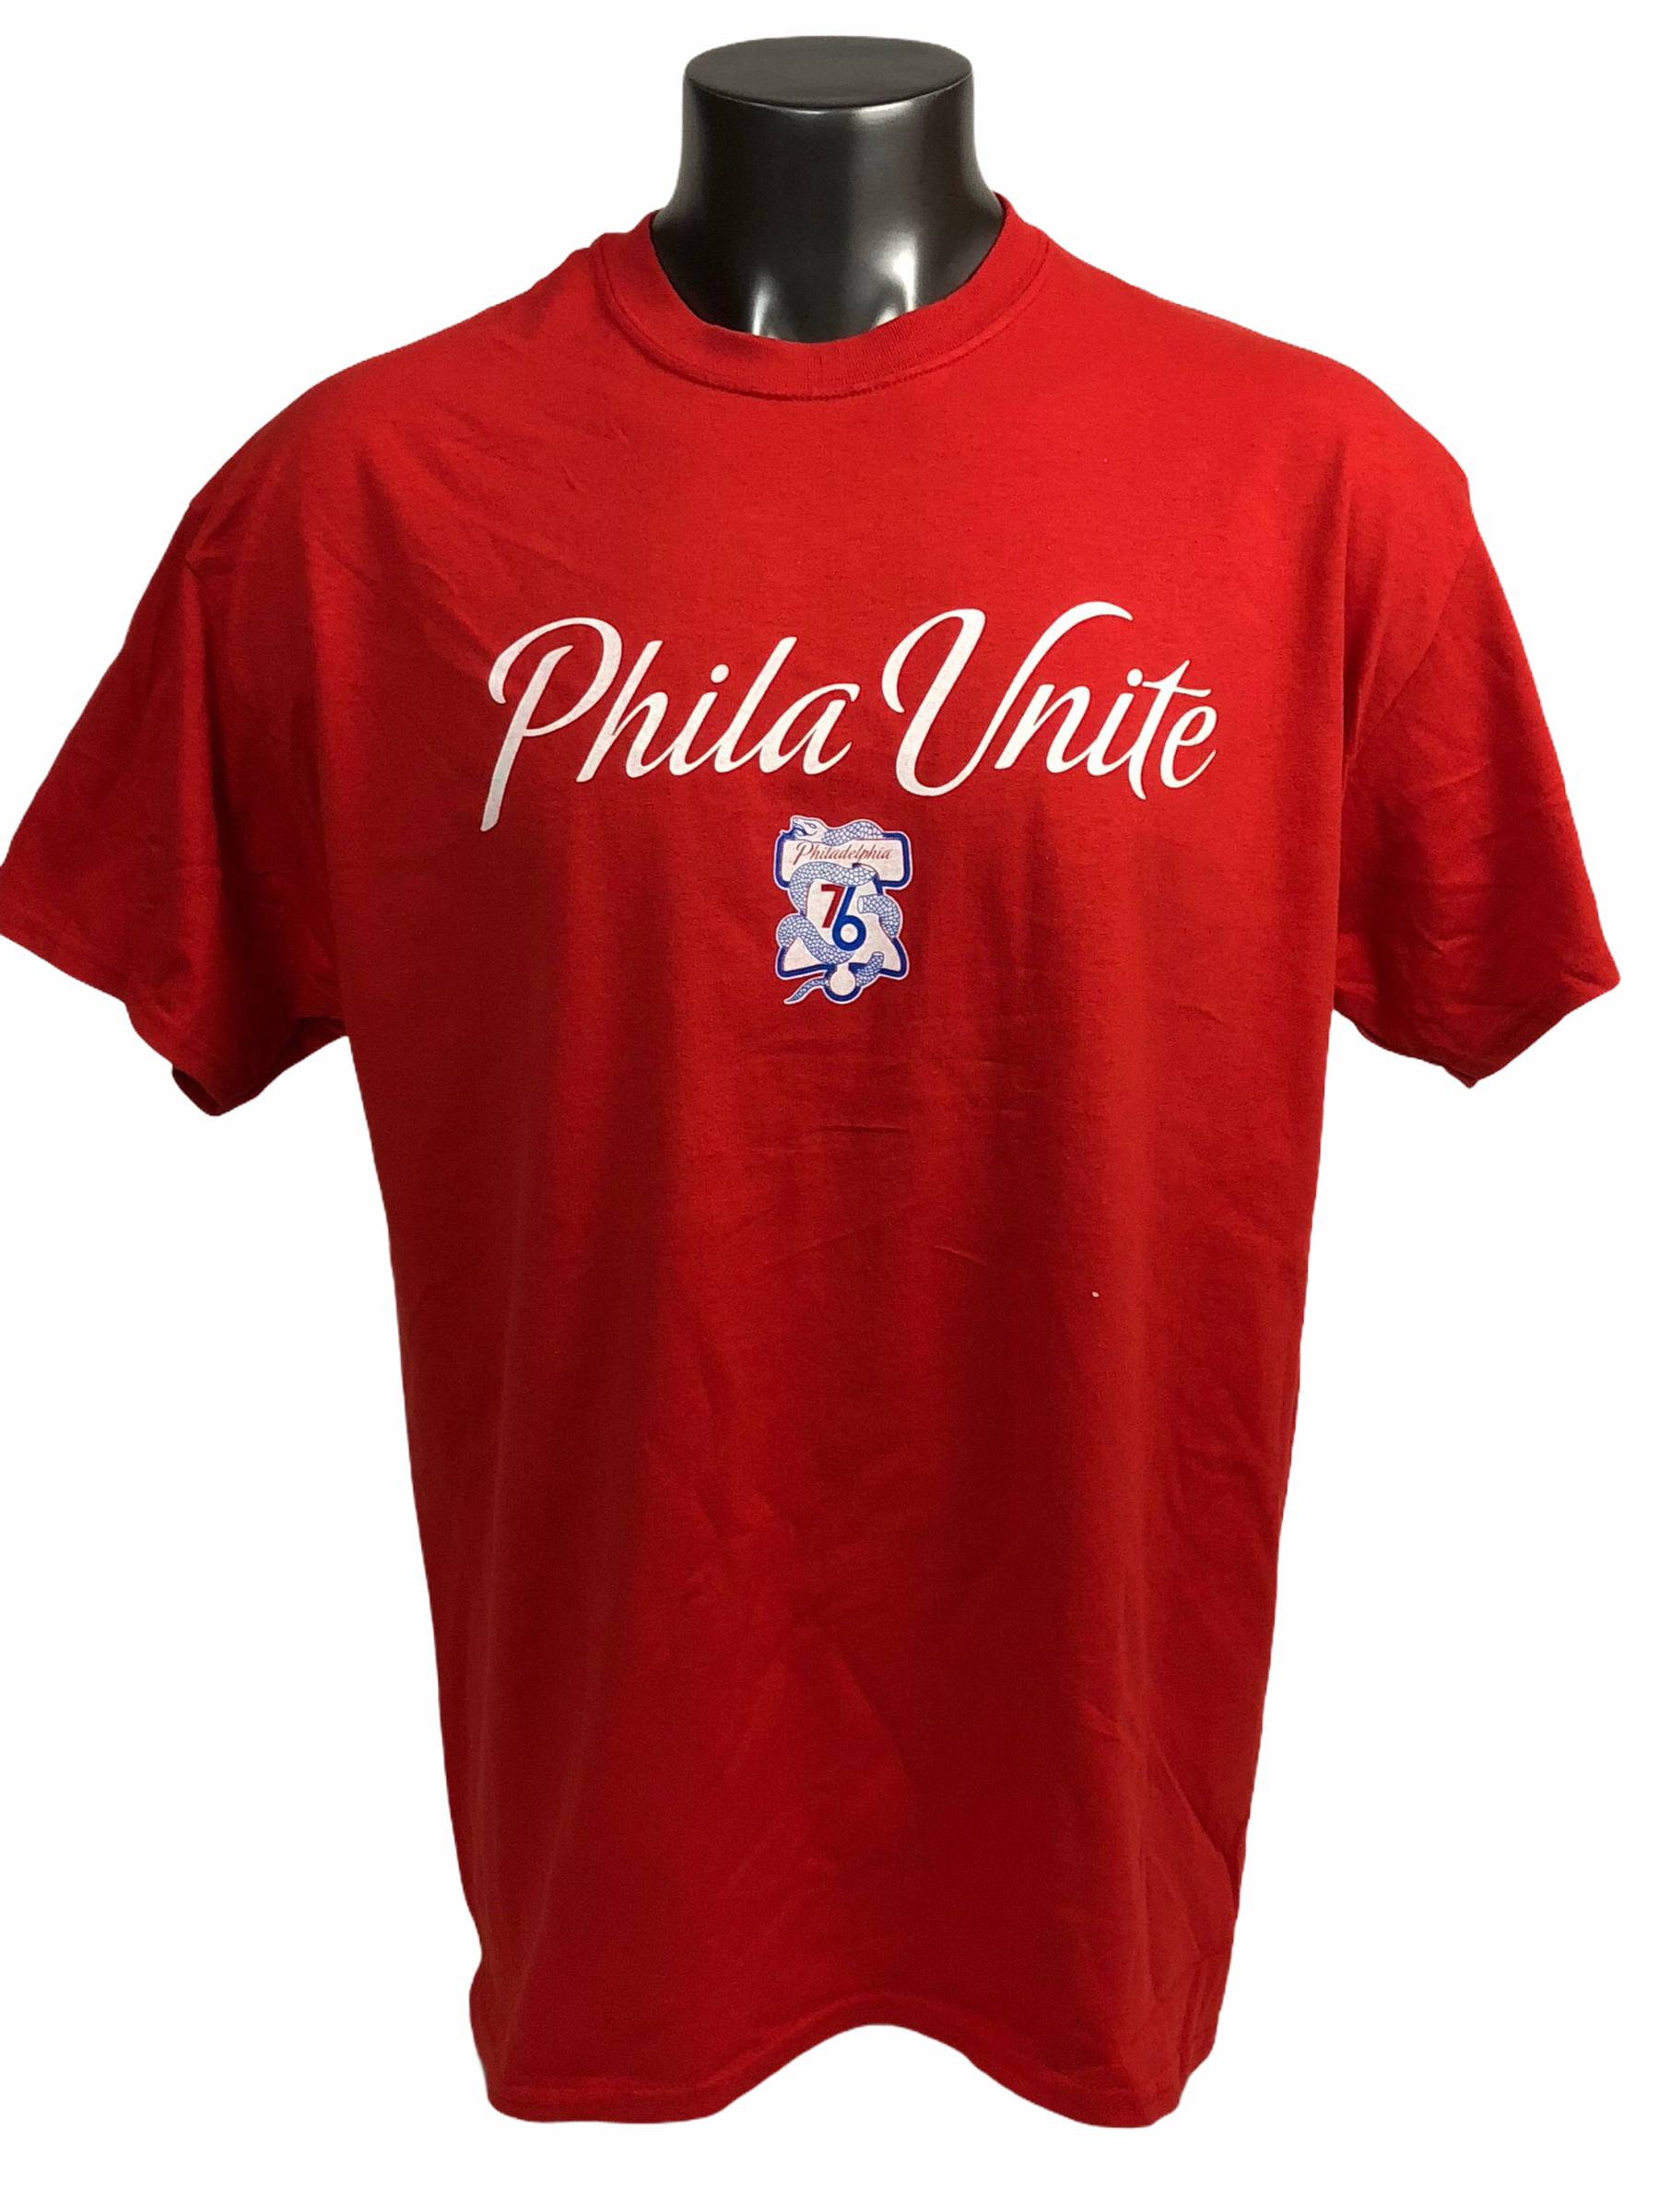  Phila Unite Shirt 76ers Playoff Shirt Philadelphia Unite Shirt  : Clothing, Shoes & Jewelry